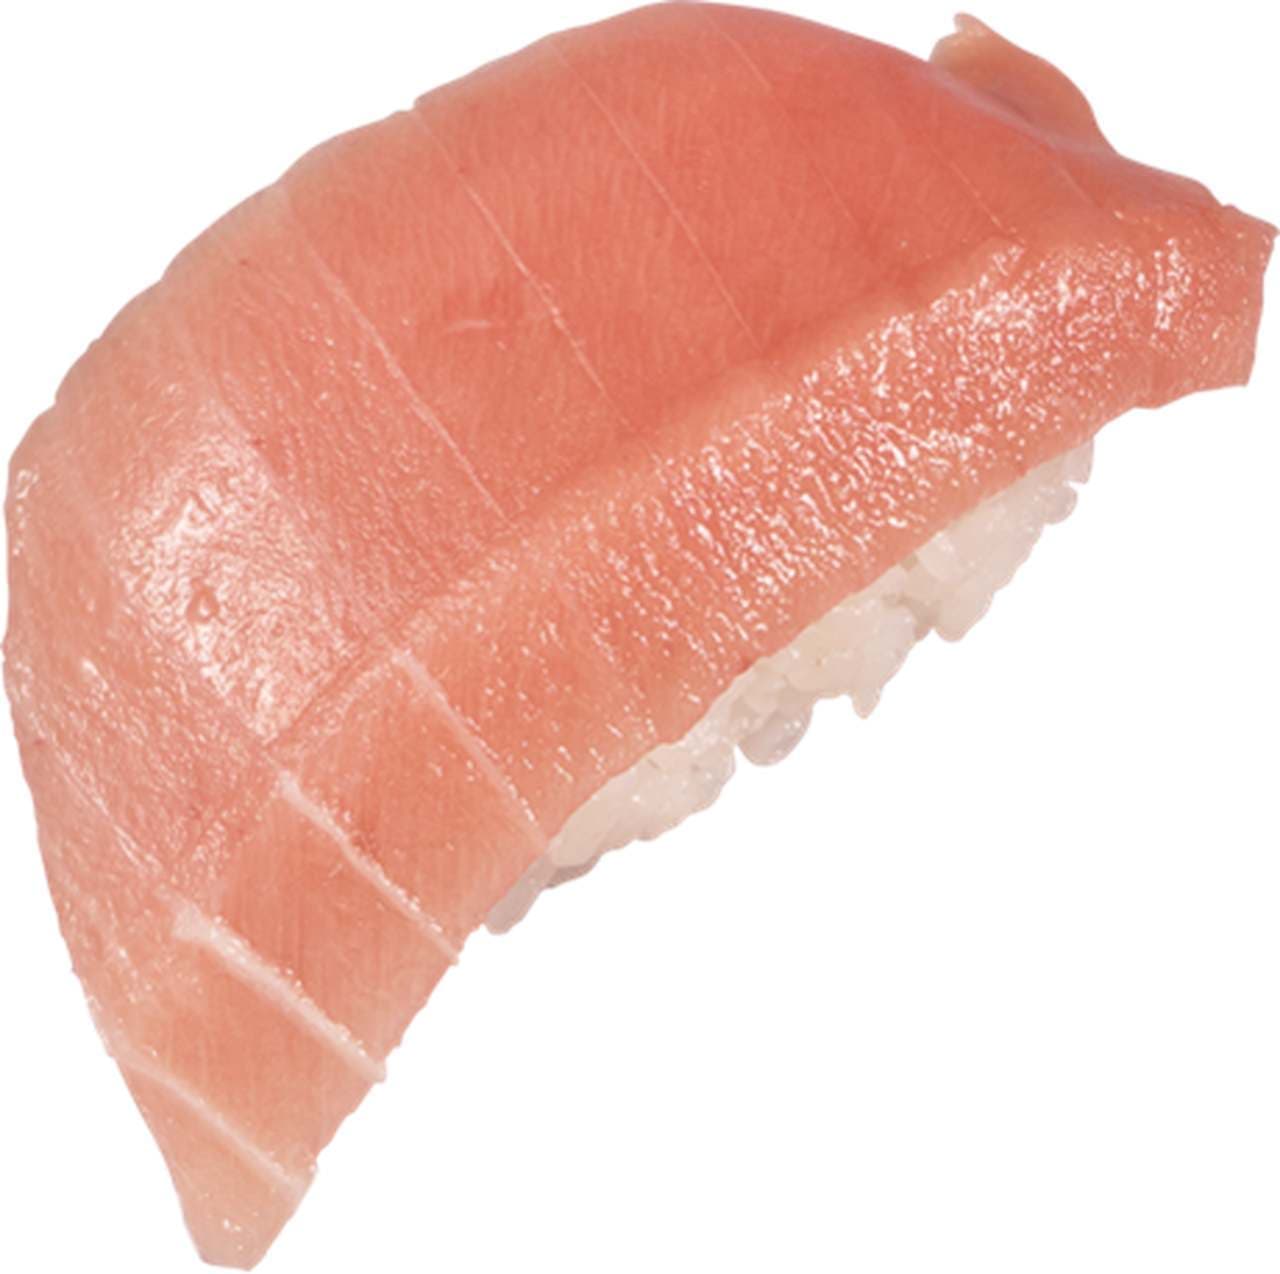 Kappa Sushi "Gorgeous Neta 100 Yen Series" with "Minami Tuna Toro" and "Big! Salmon"